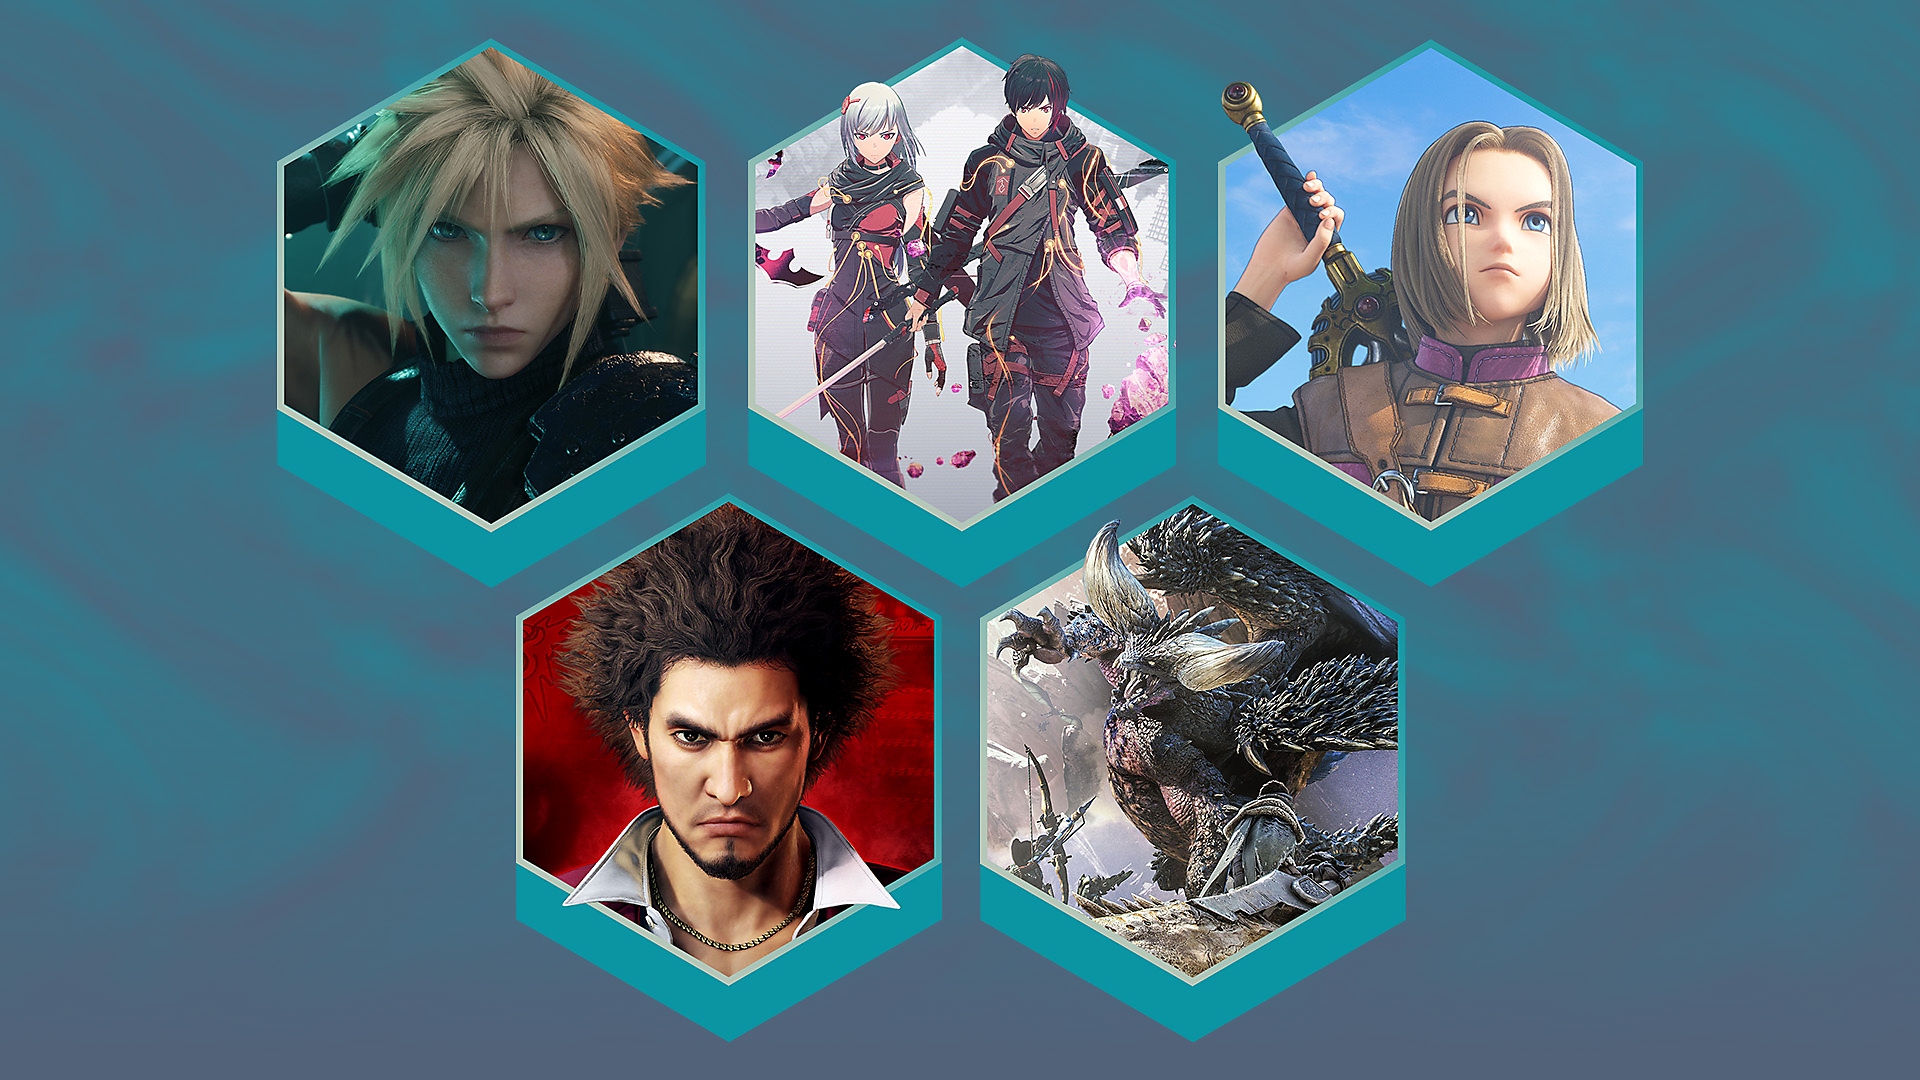 Arte promocional dos melhores RPG japoneses para PS4 e PS5, incluindo Final Fantasy VII Remake, Scarlet Nexus, Dragon Quest Heroes XI: Echoes of an Elusive Age, Yakuza: Like a Dragon e Monster Hunter: World.